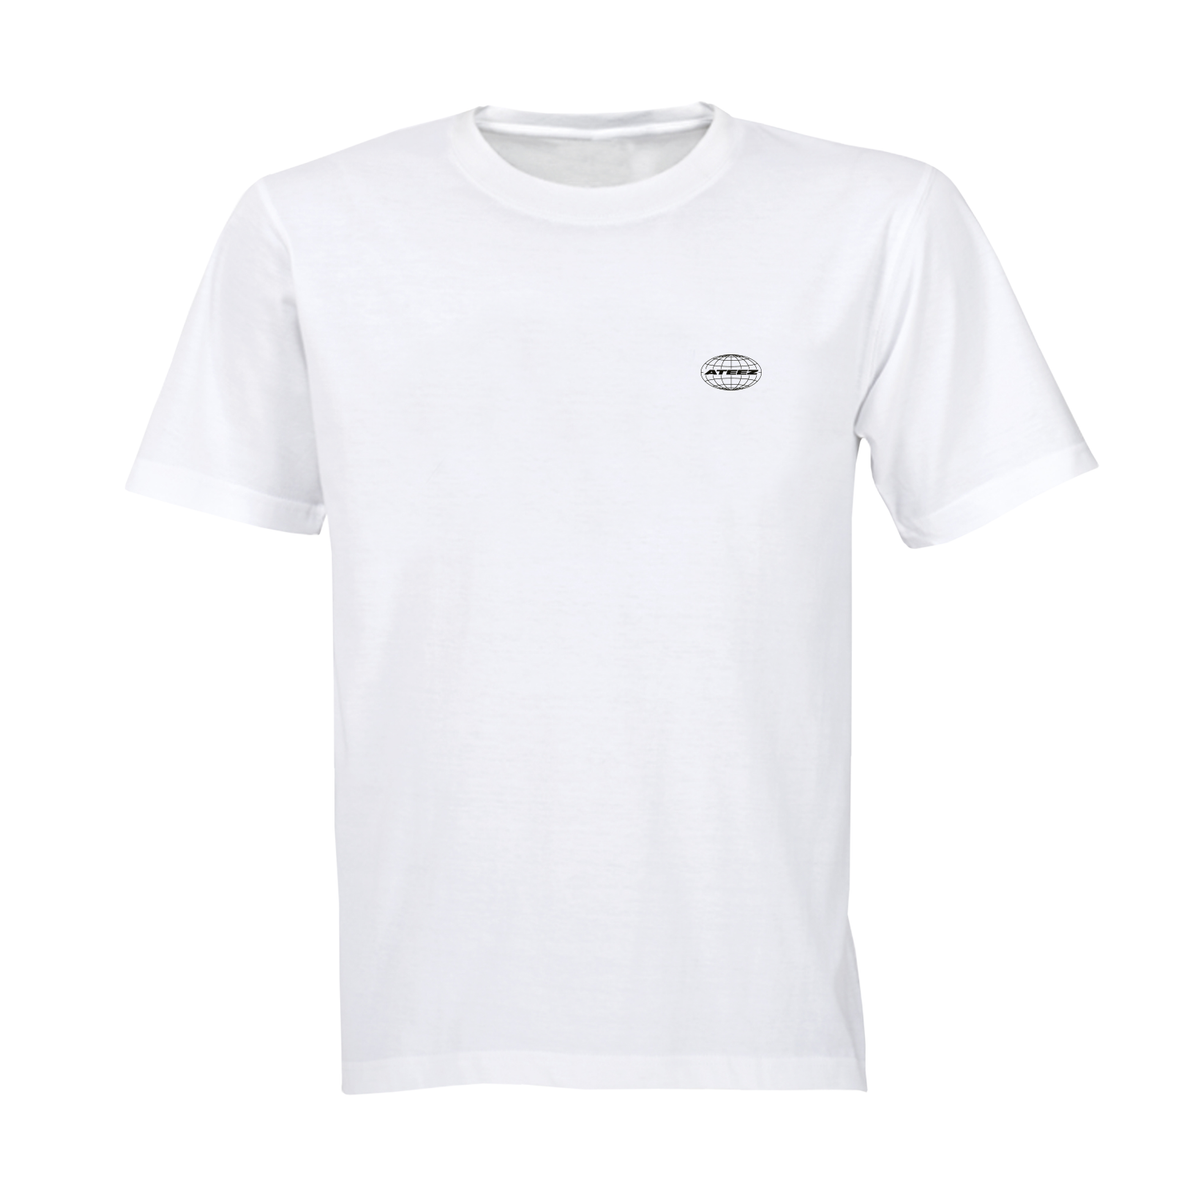 Official Ateez EU Merch Expedition Tour T Shirt - White – Ateez Store